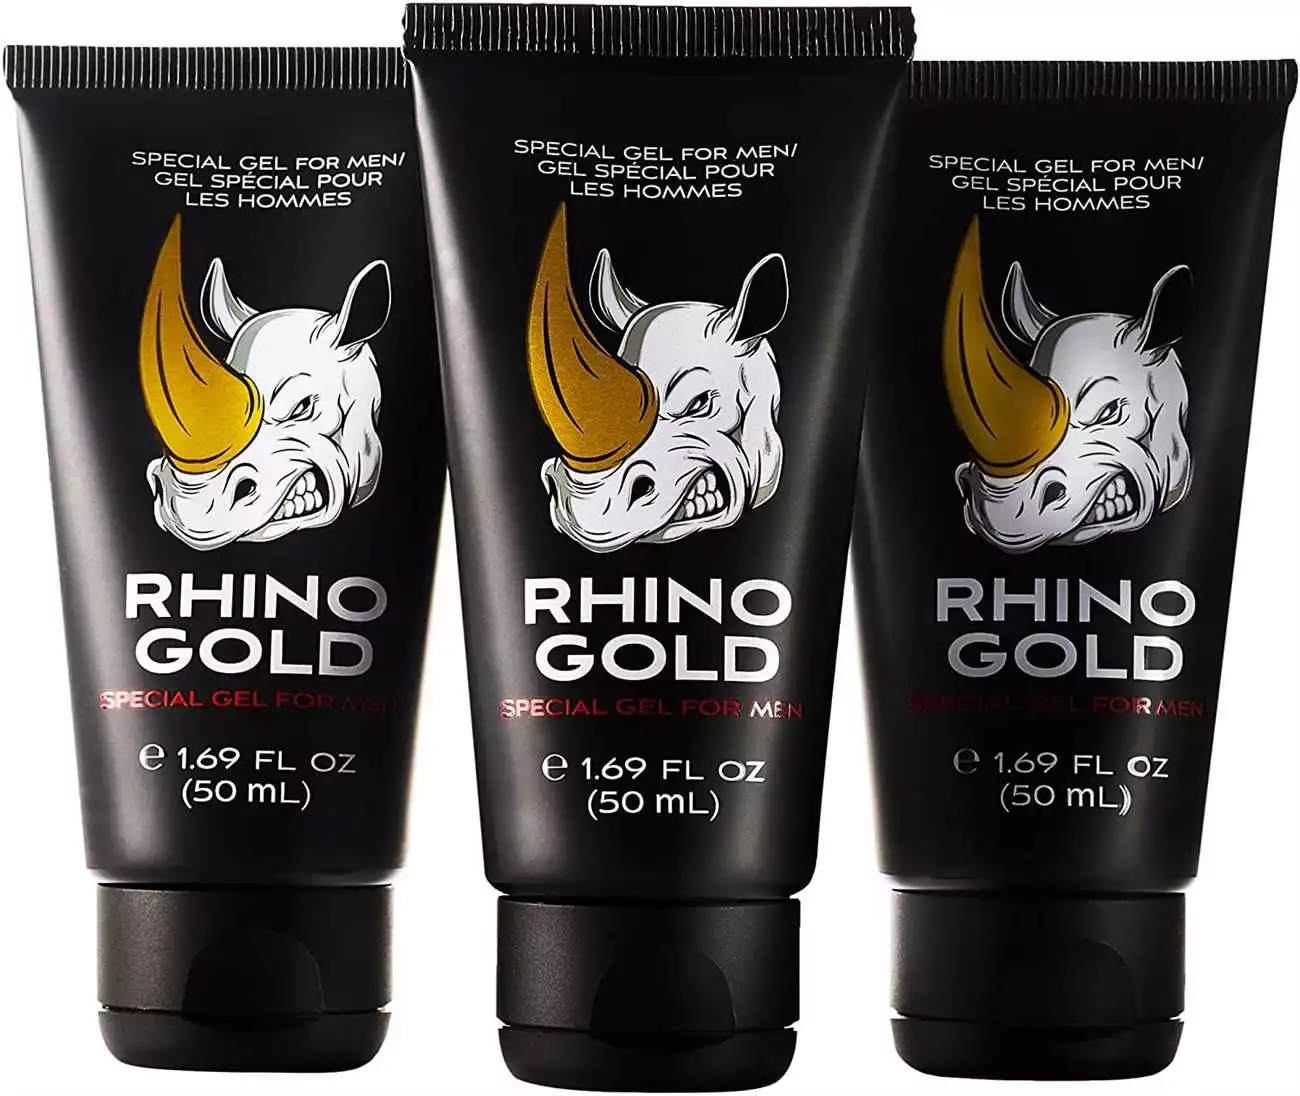 Rhino Gold Gel En Reus Comprar